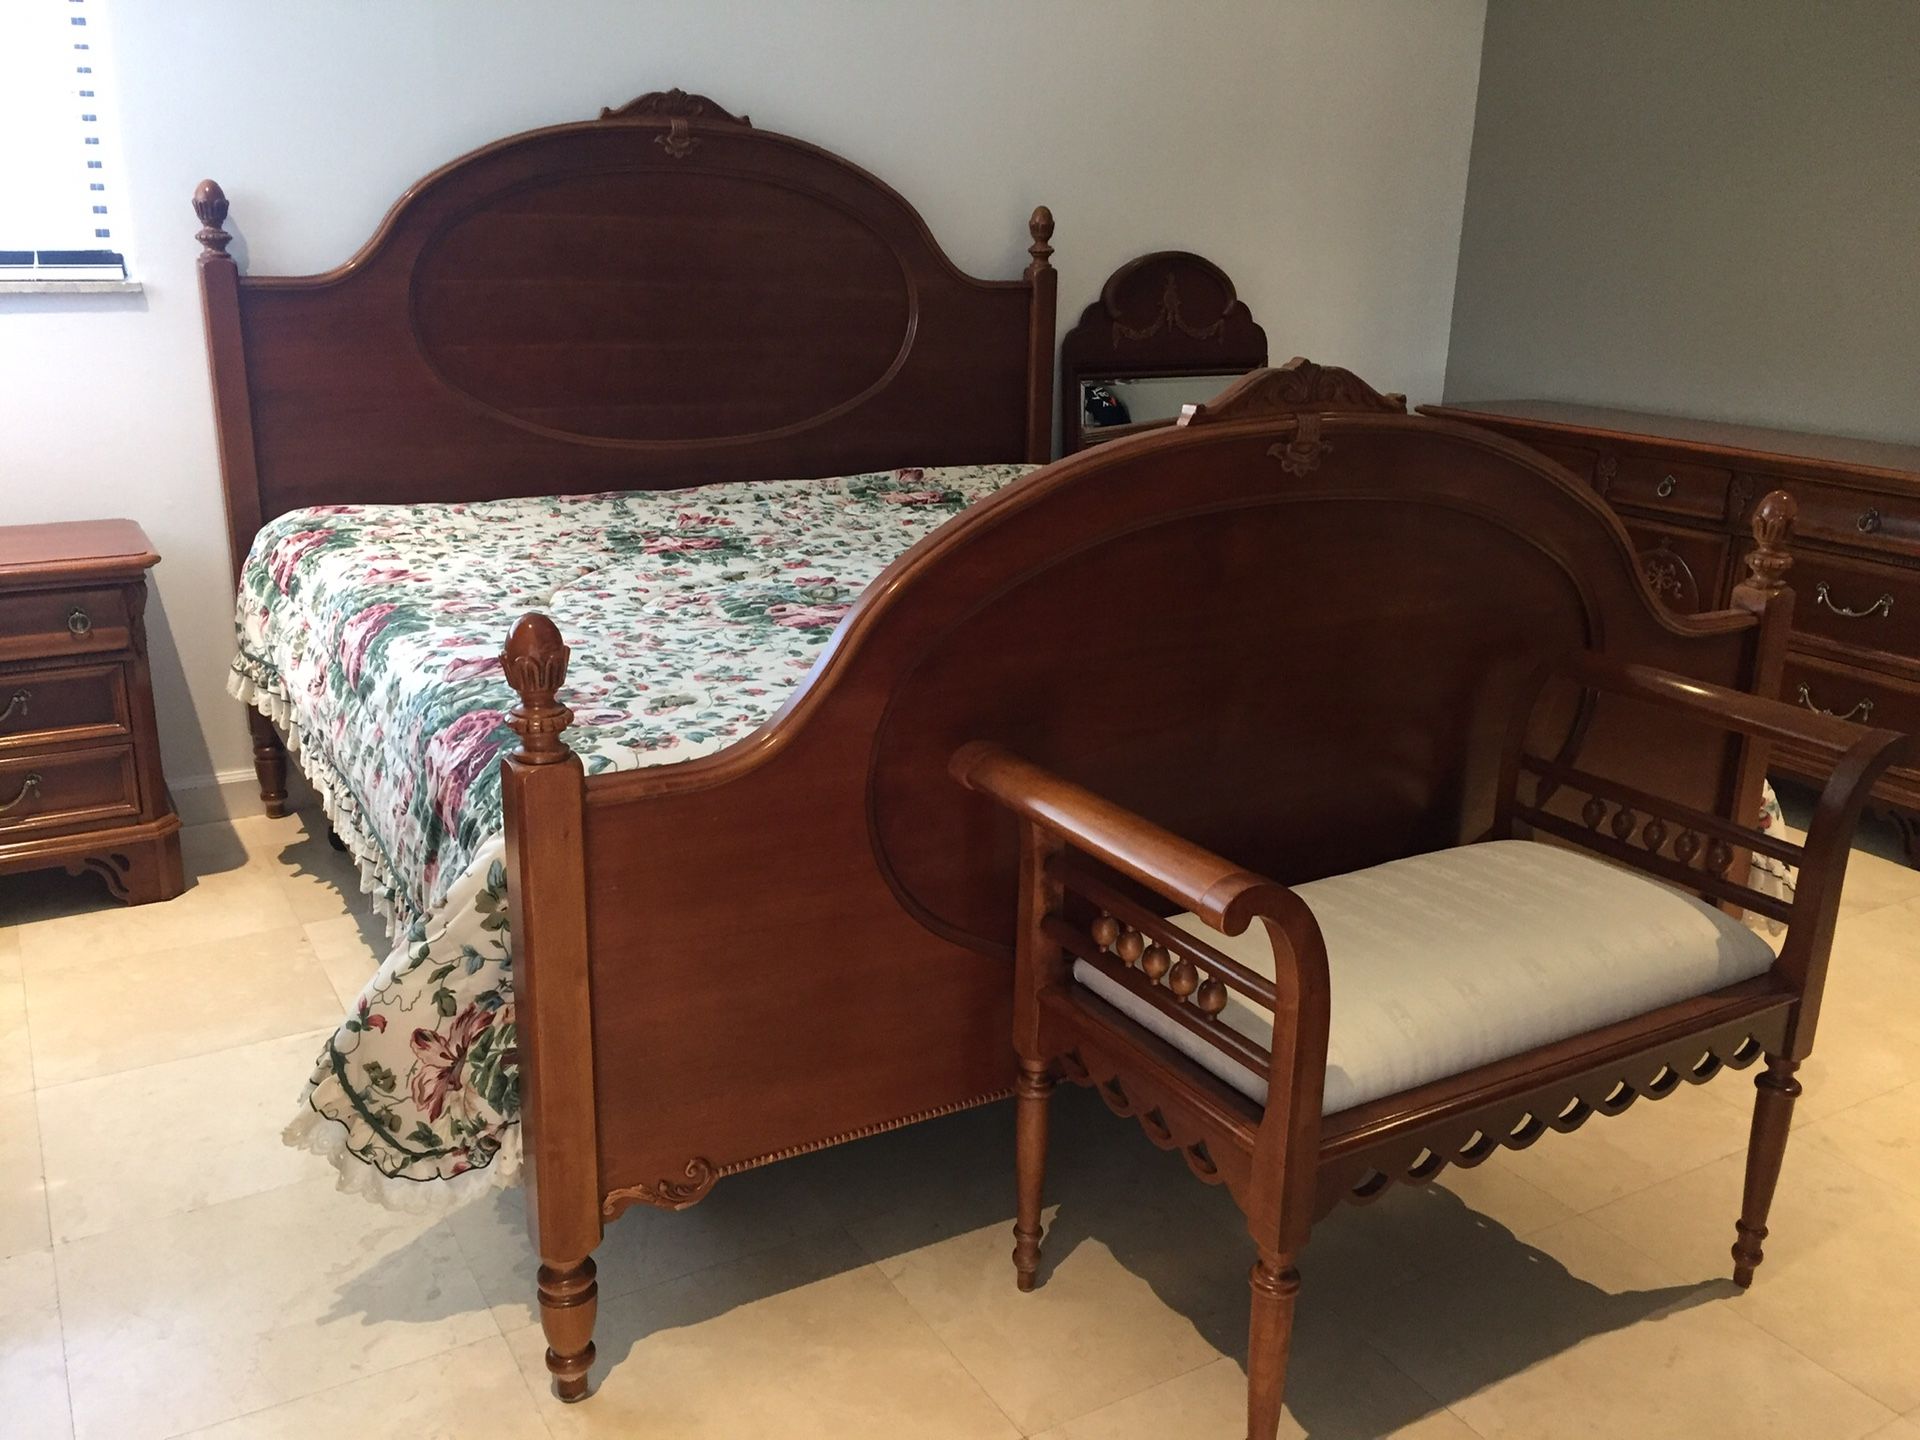 LEXINGTON Complete 7 piece Victorian Bedroom Set - Excellent Condition. One owner.